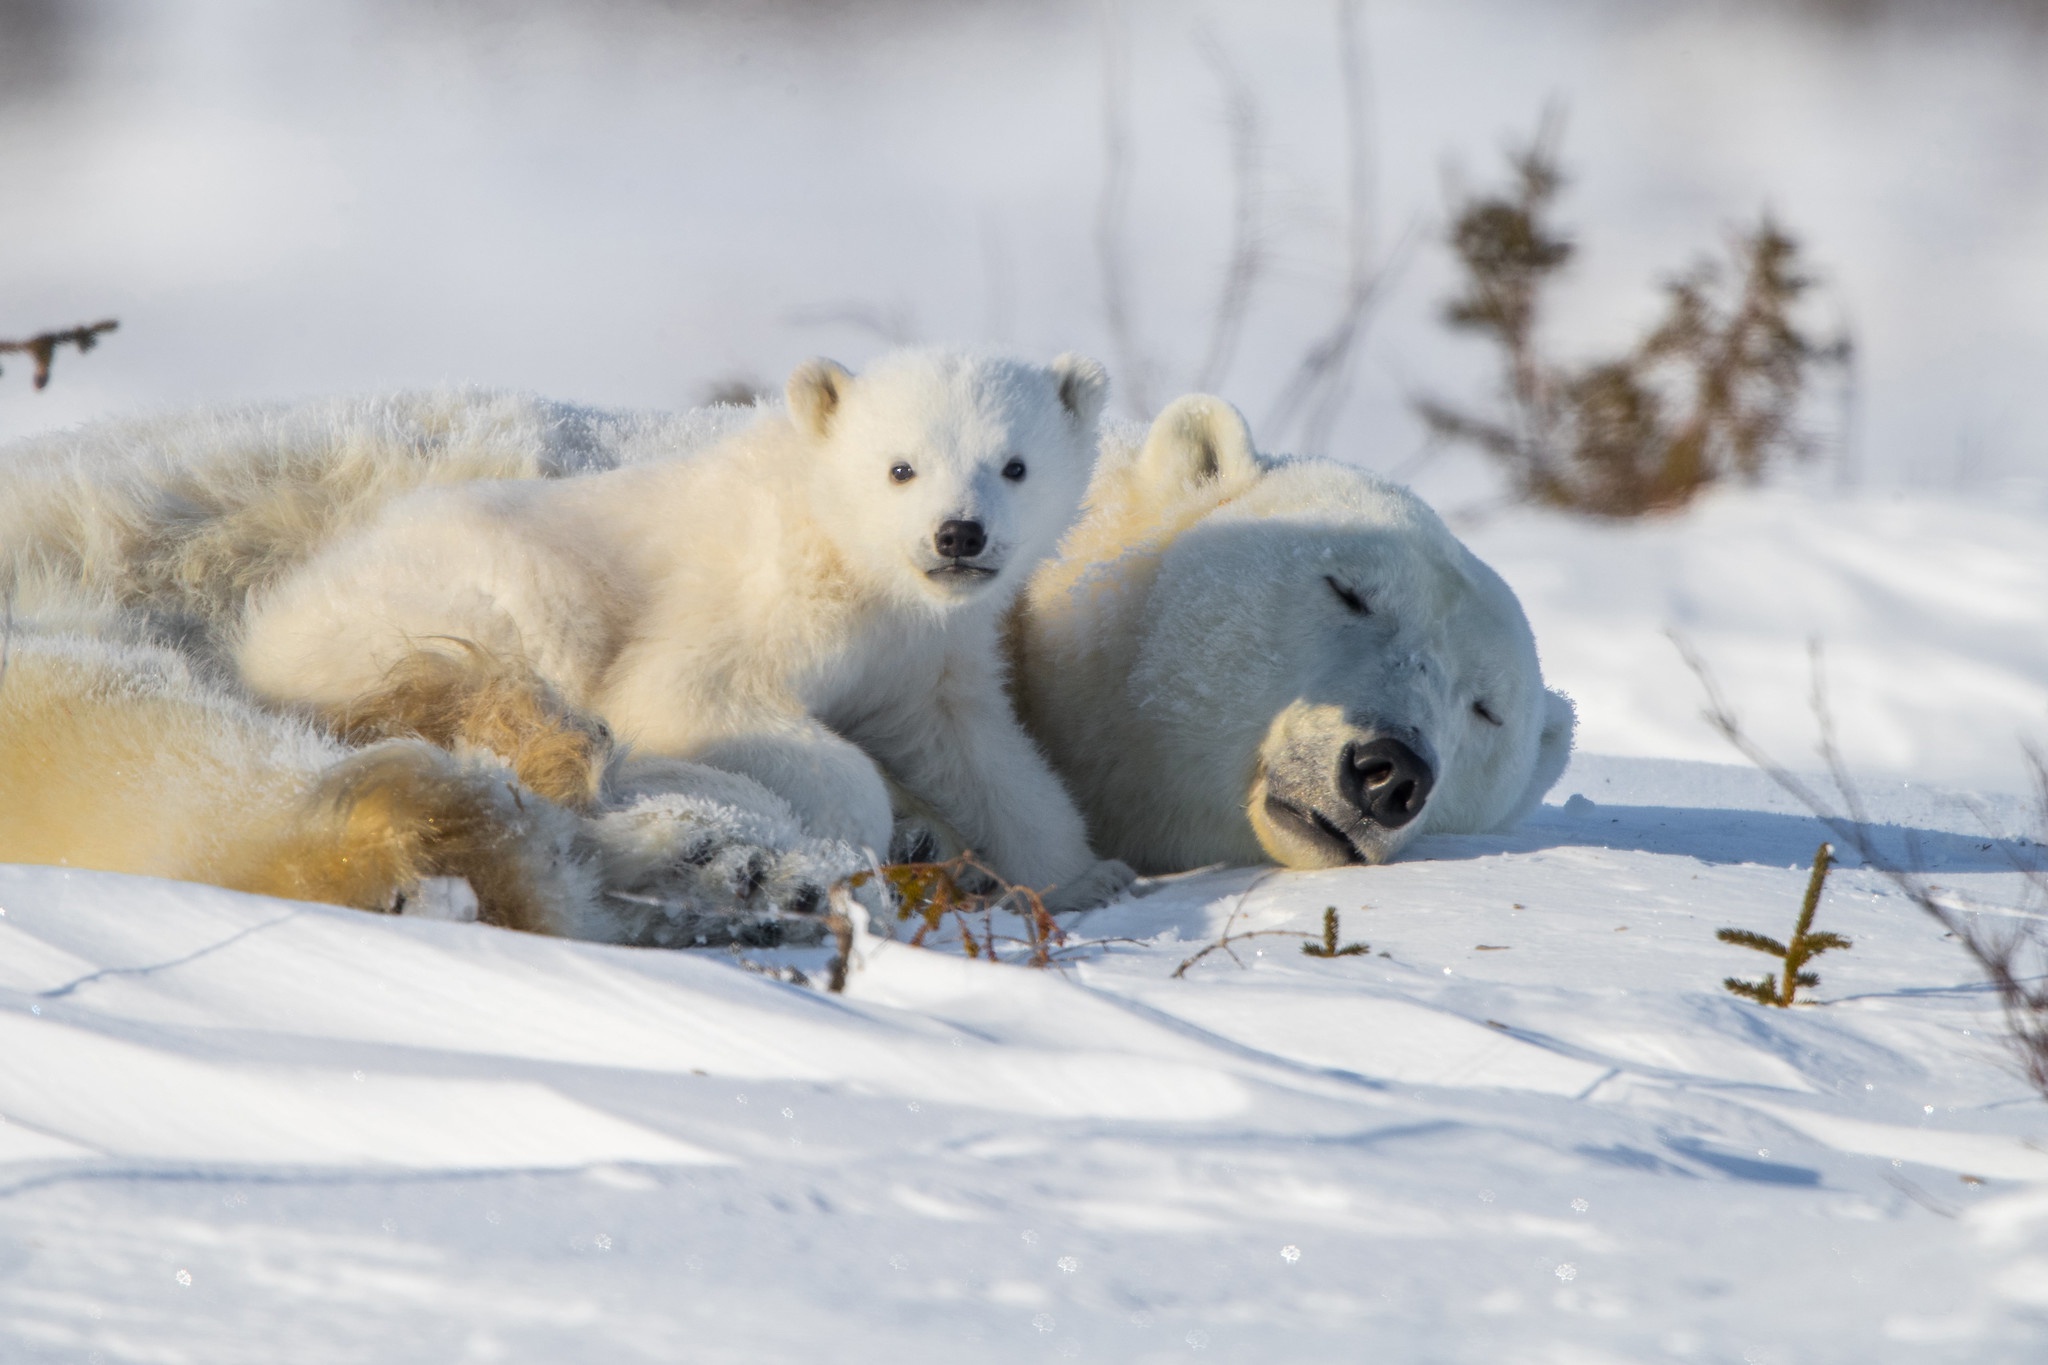 General 2048x1365 animals mammals polar bears bears snow baby animals